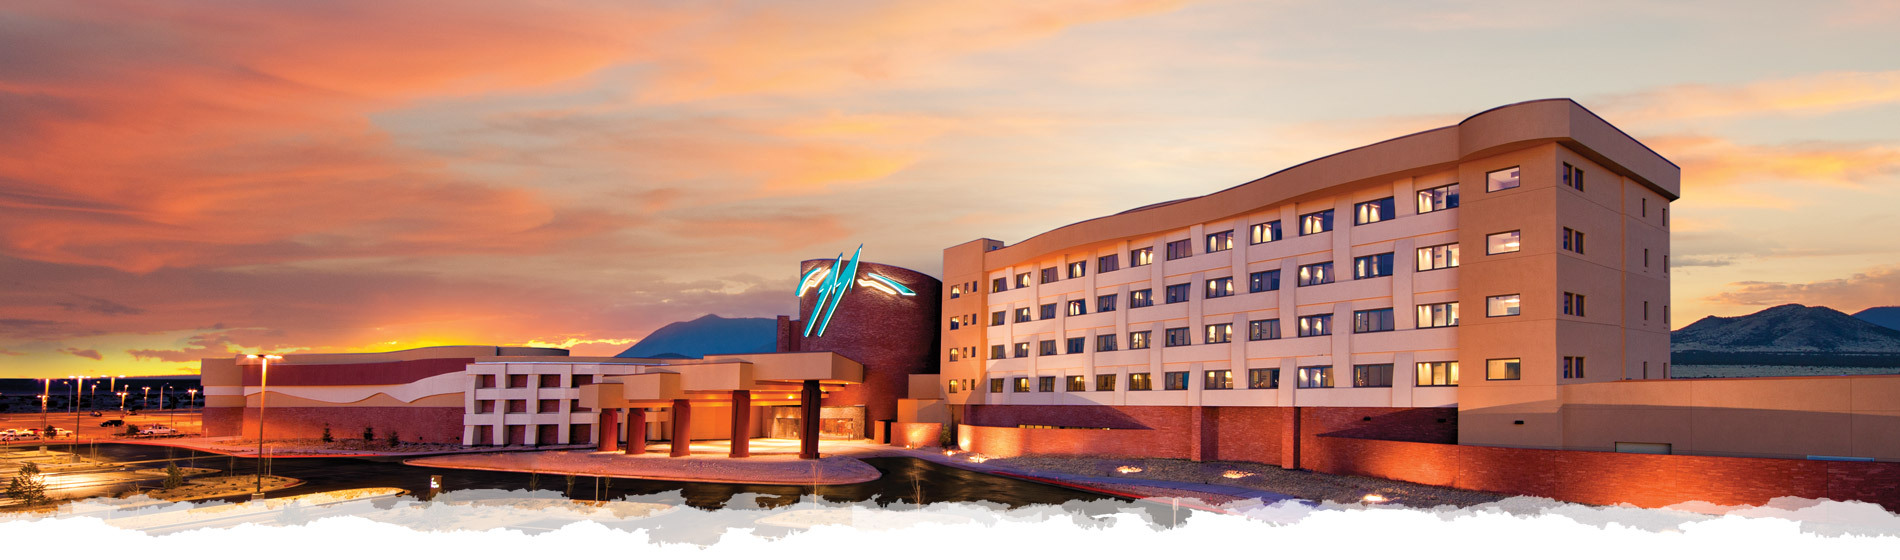 Photo of Twin Arrows Navajo Casino Resort, Flagstaff, AZ